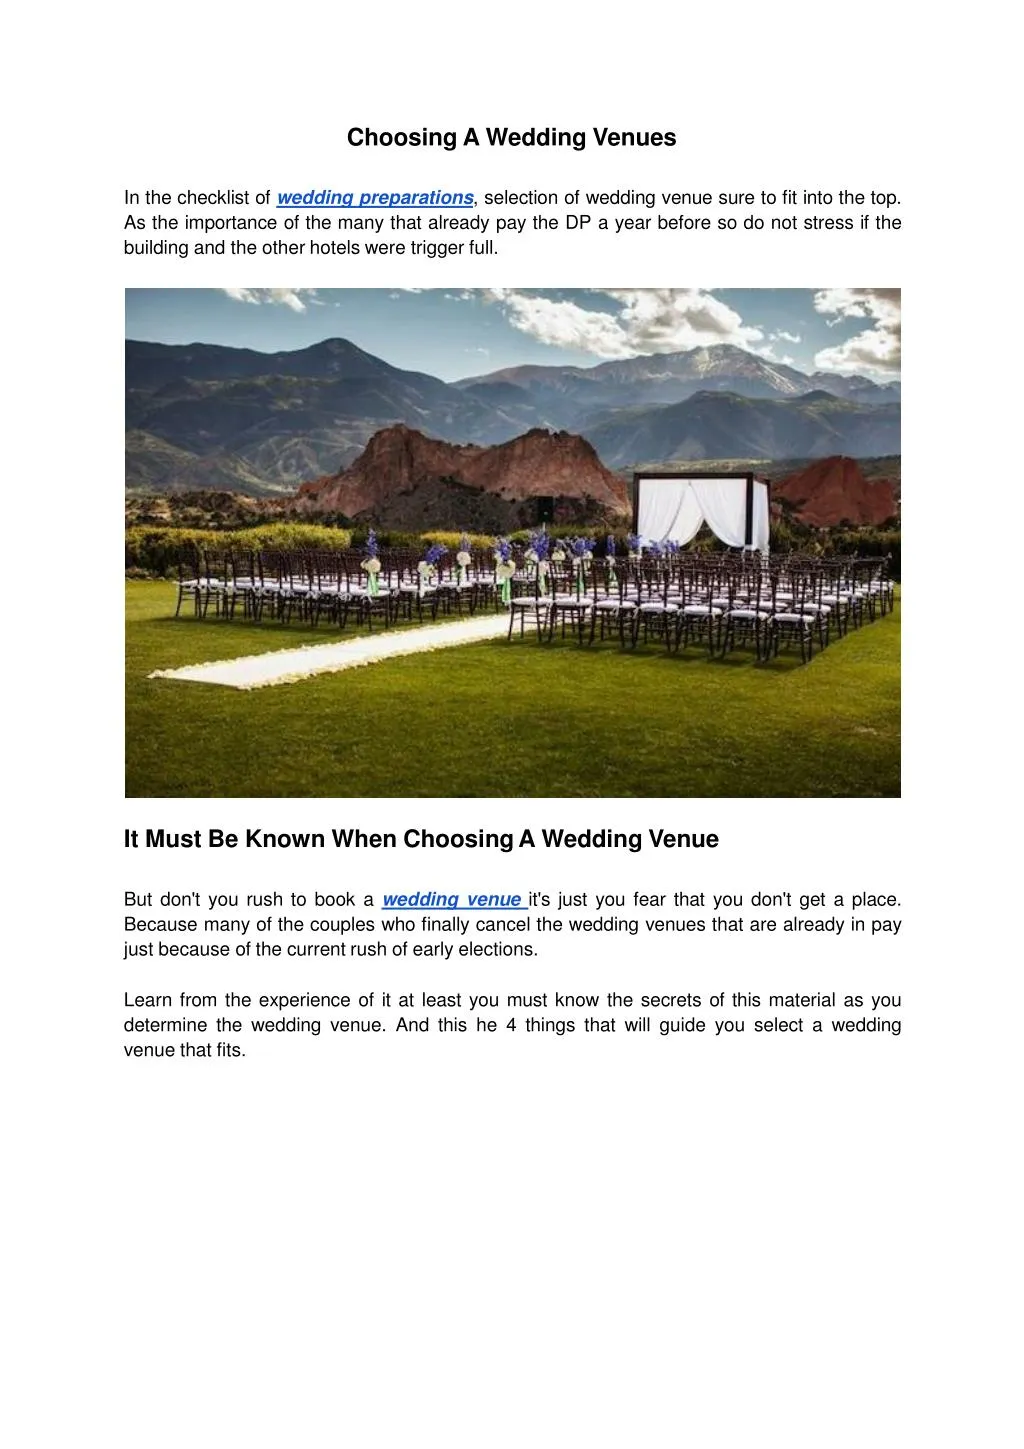 choosing a wedding venues in the checklist